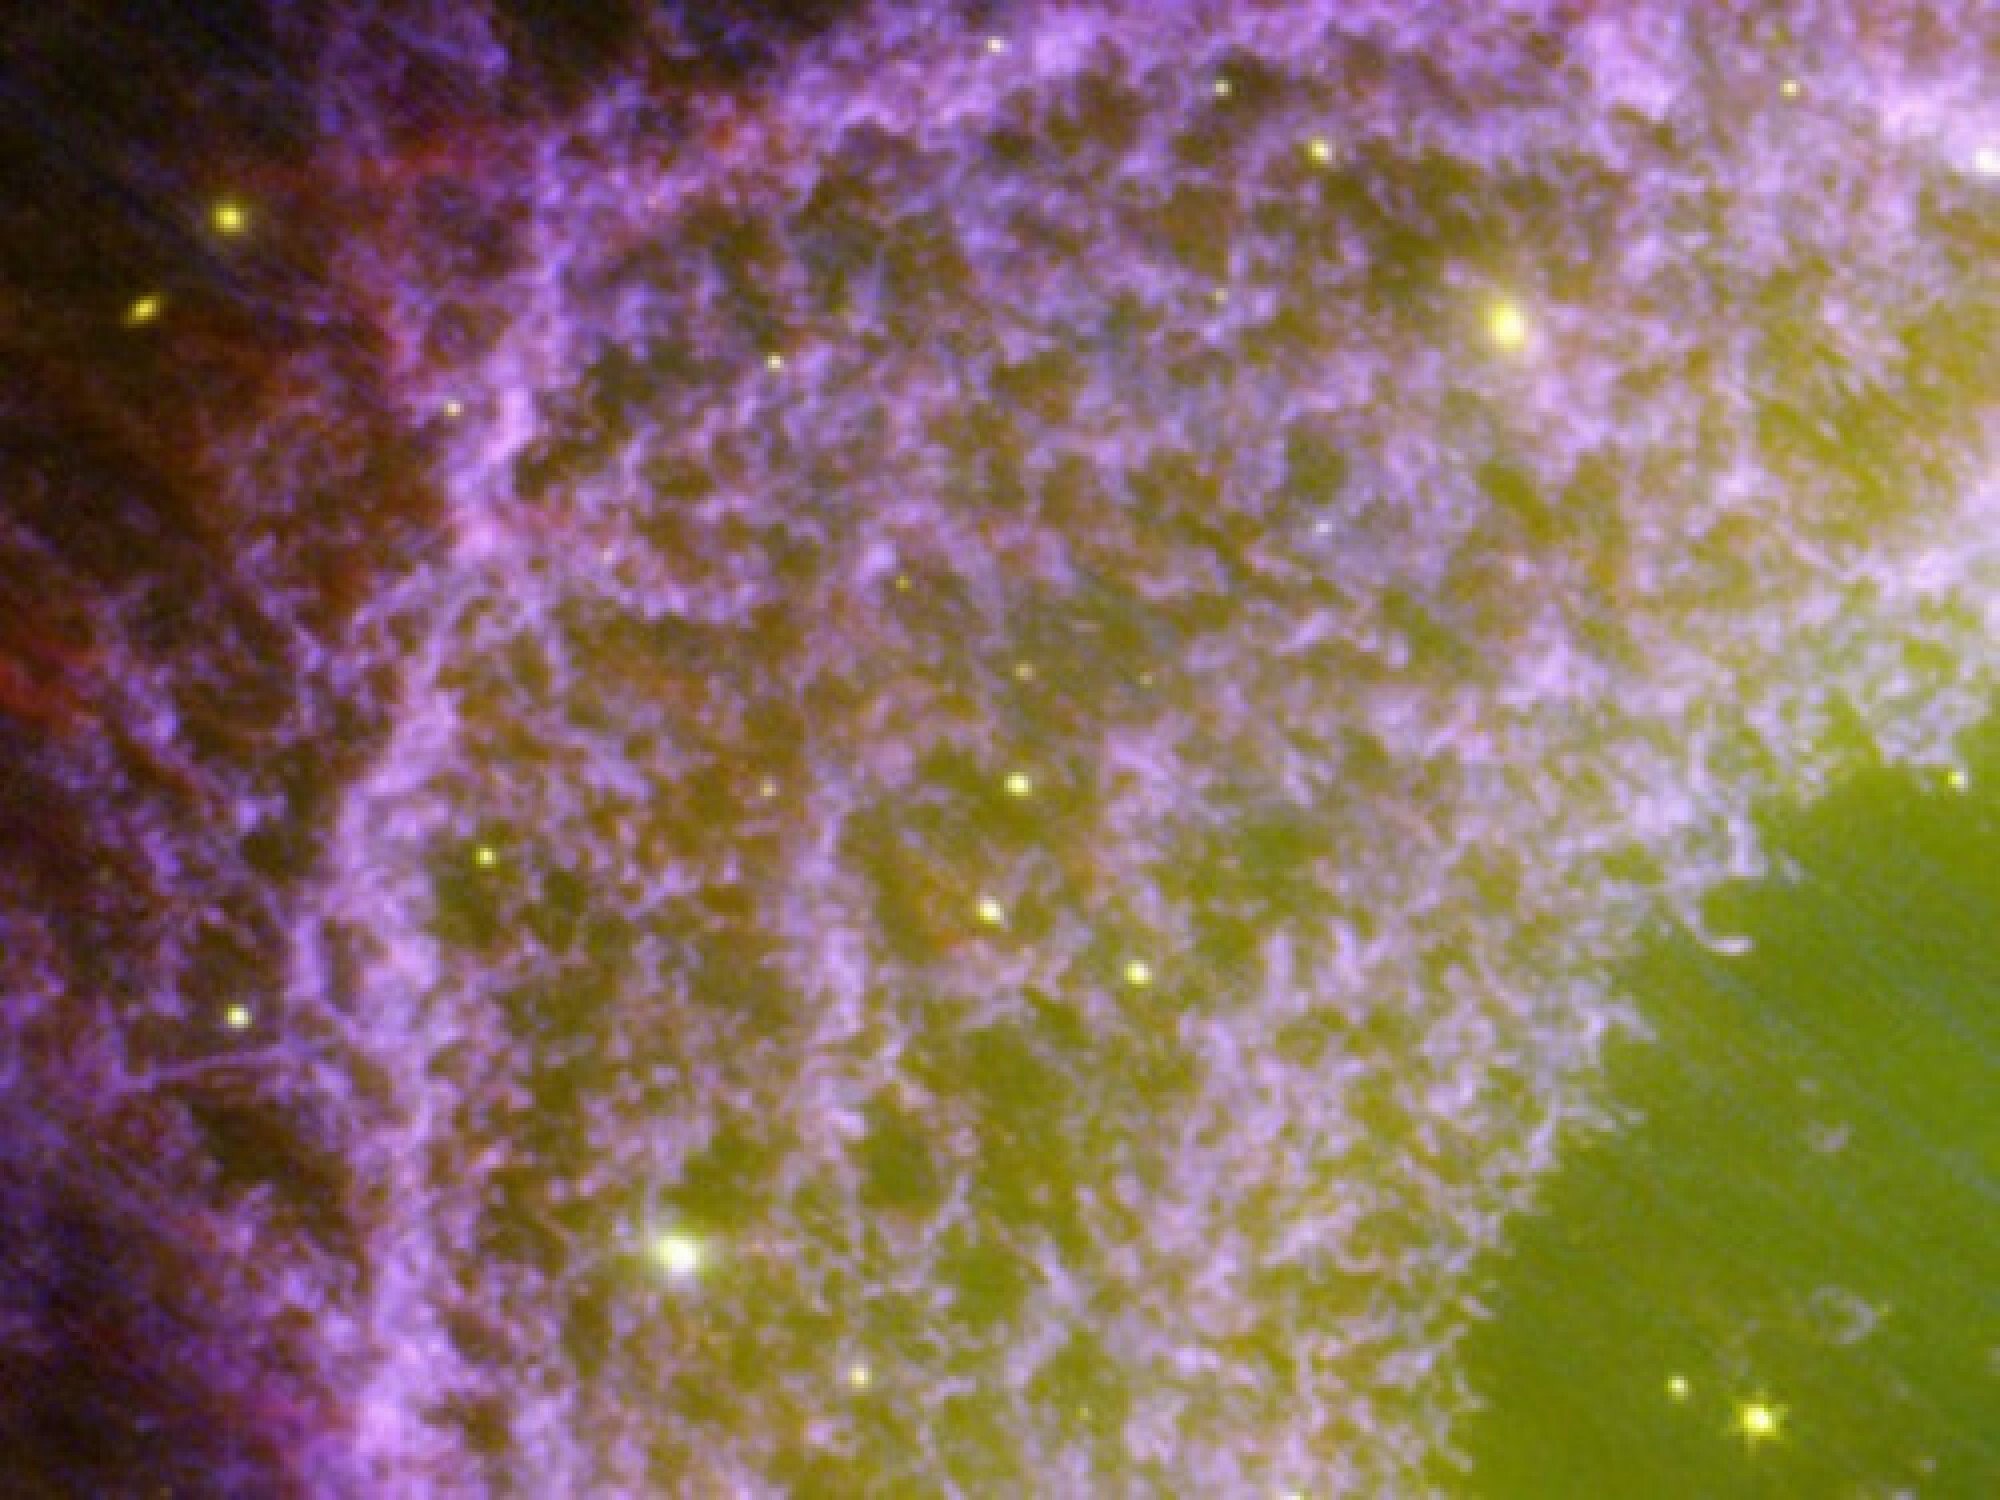 Observing Ring Nebula's clumps